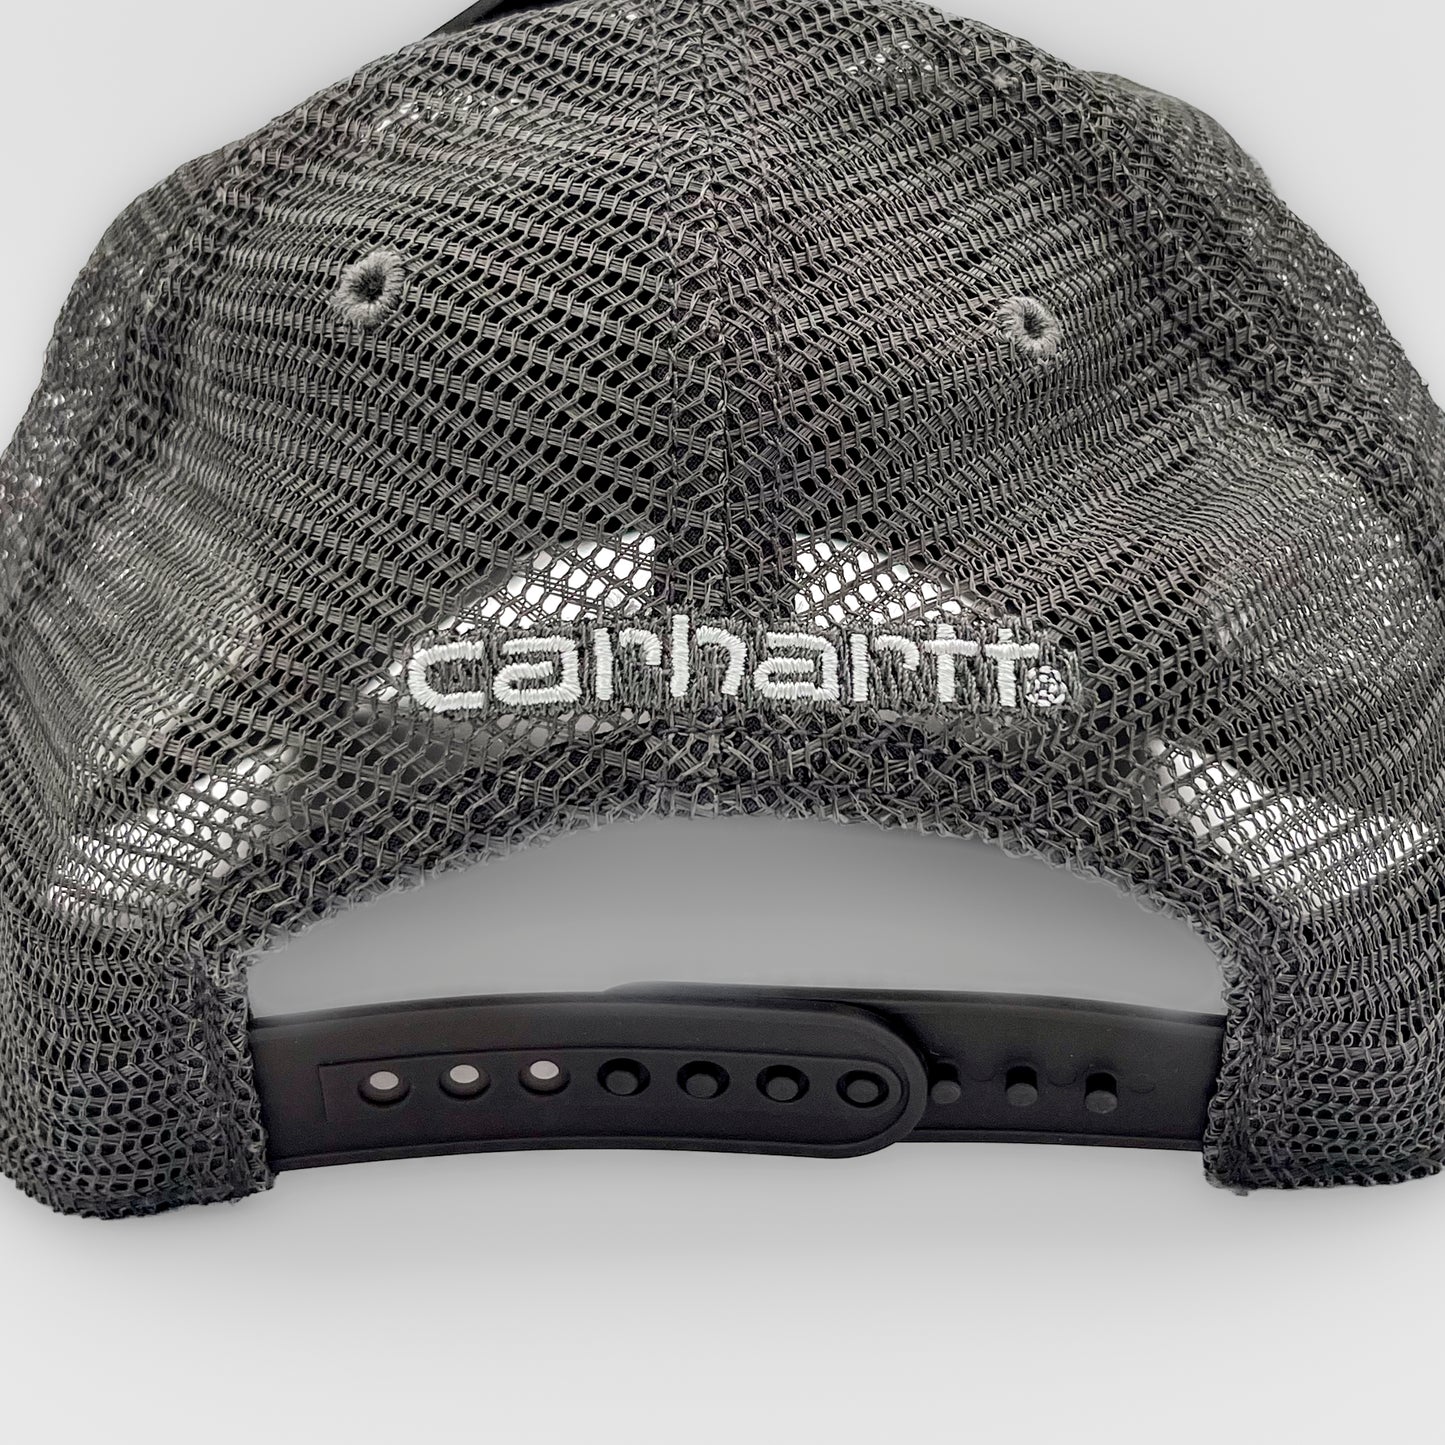 Carhartt - Canvas Mesh-Back Cap - Gravel